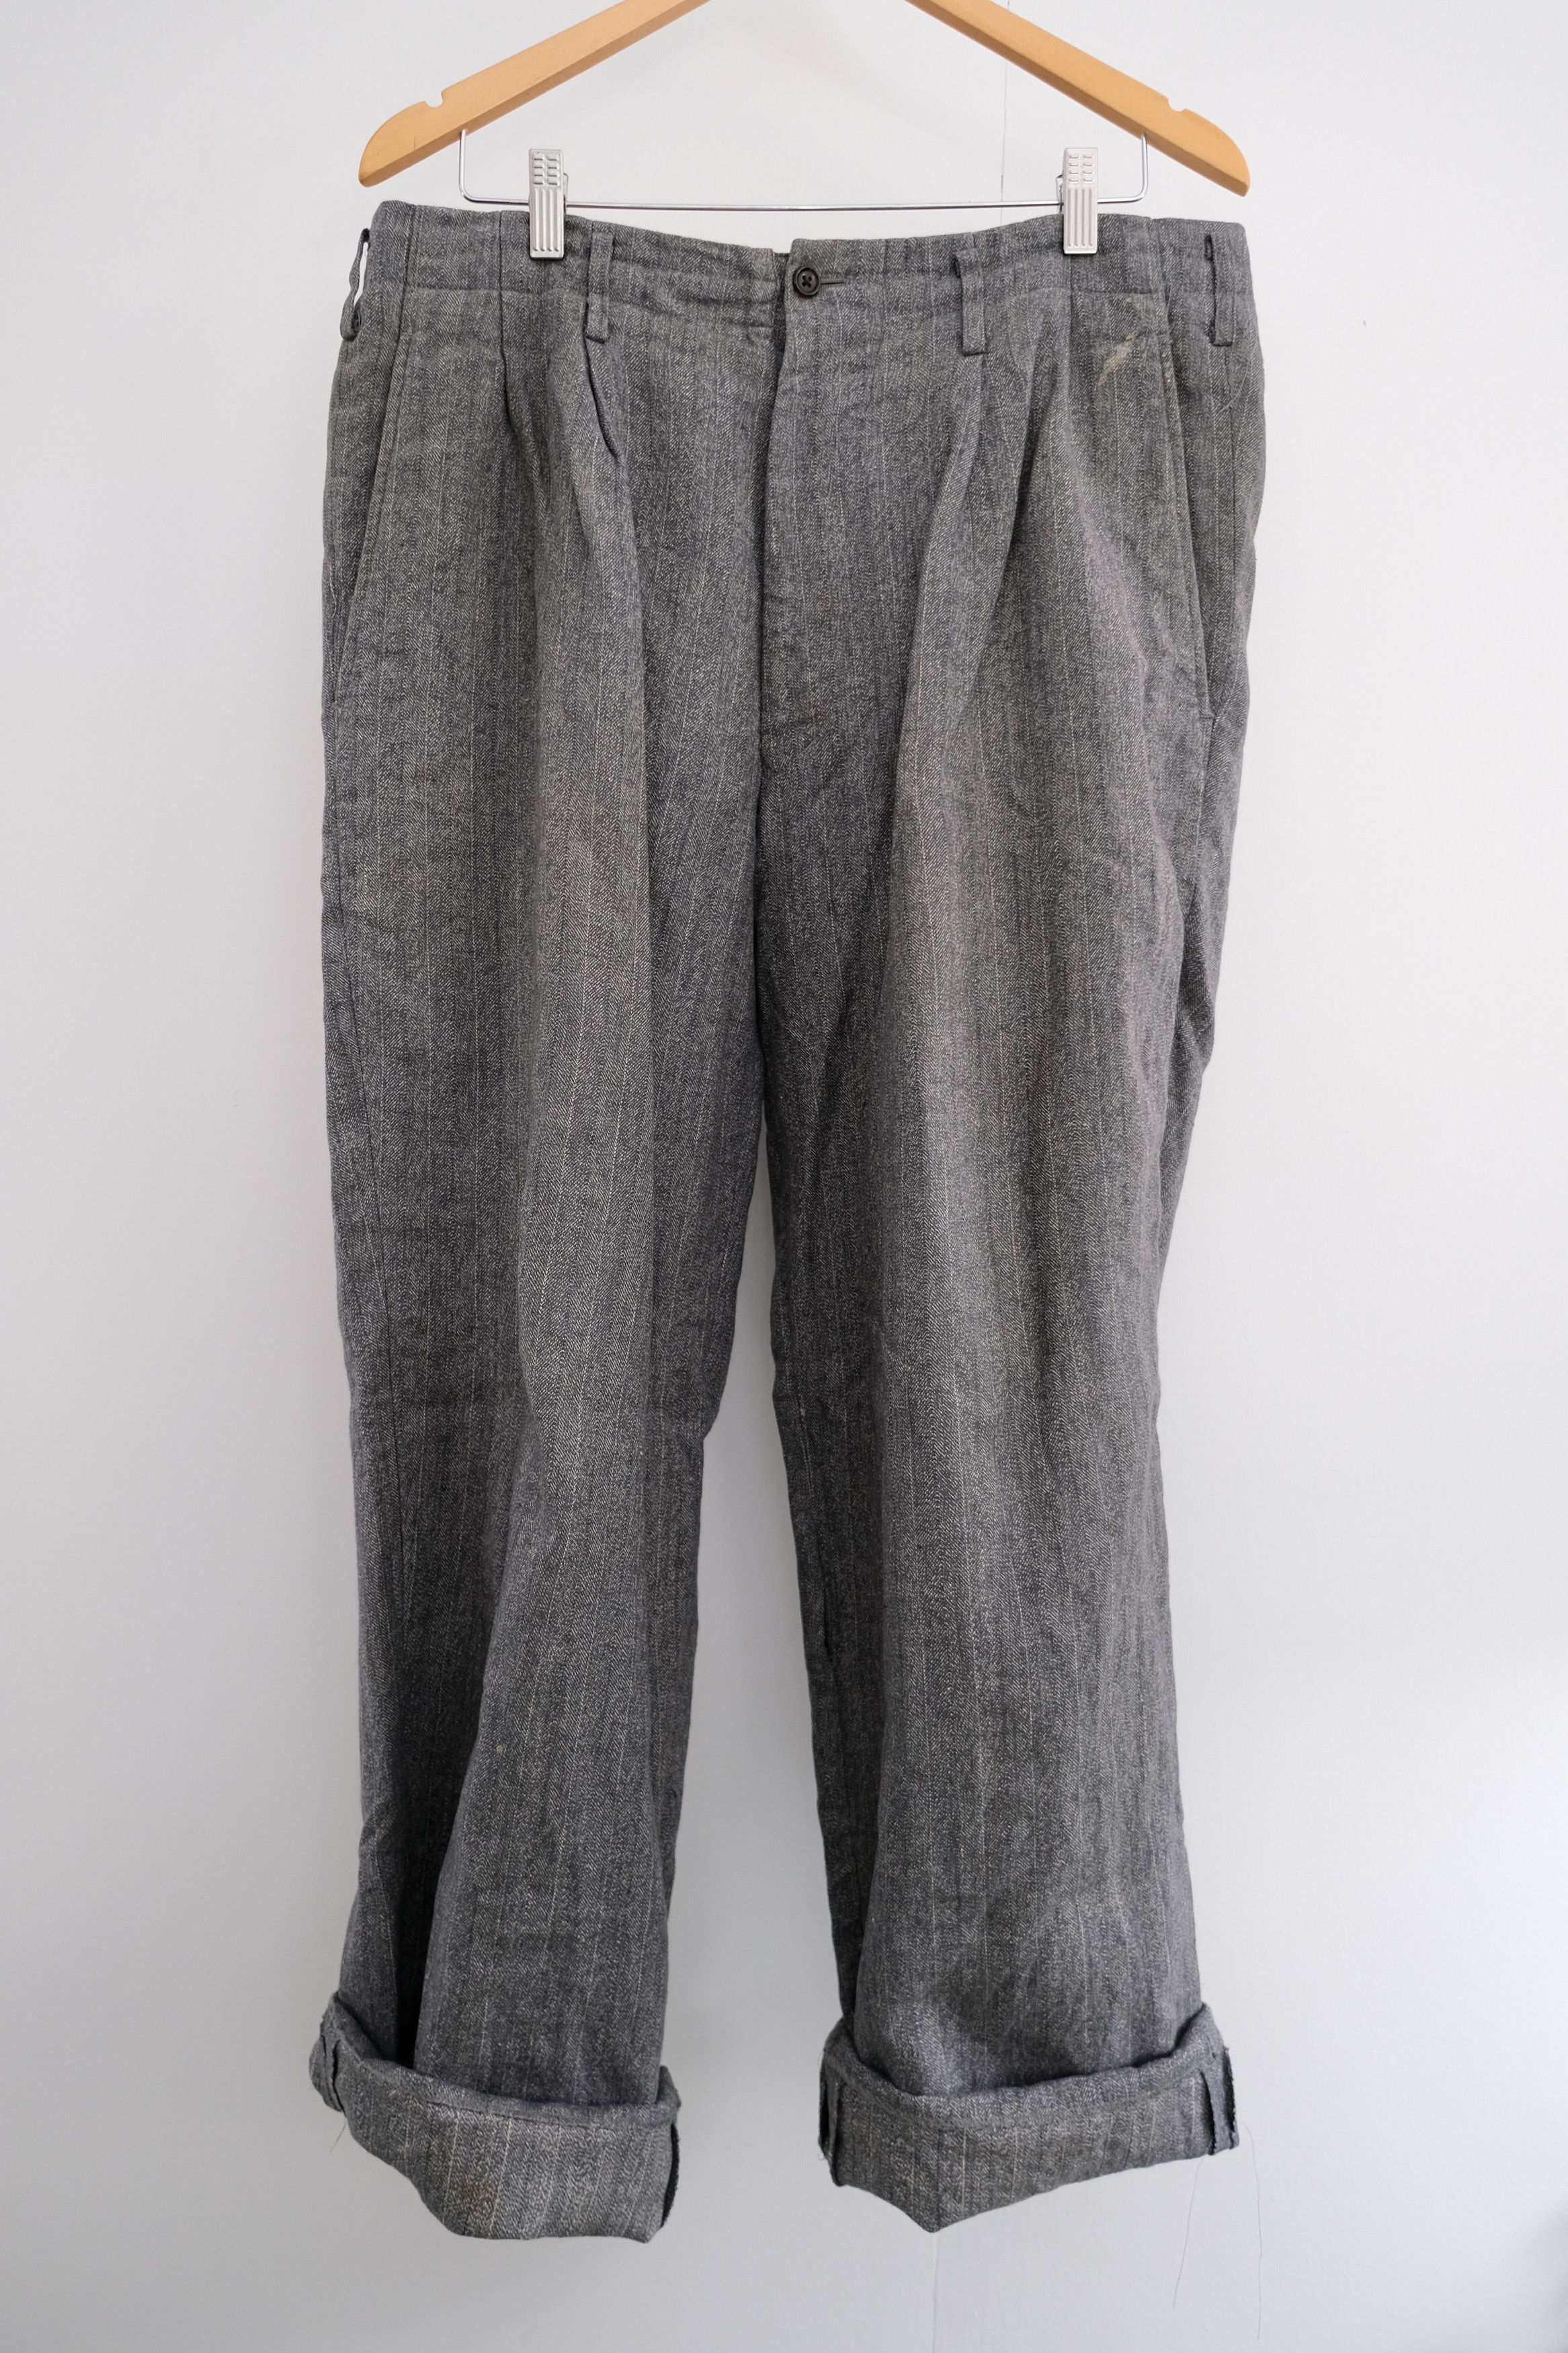 1980s-90s Linen-Cotton Distressed Double Tuck Pants - 1